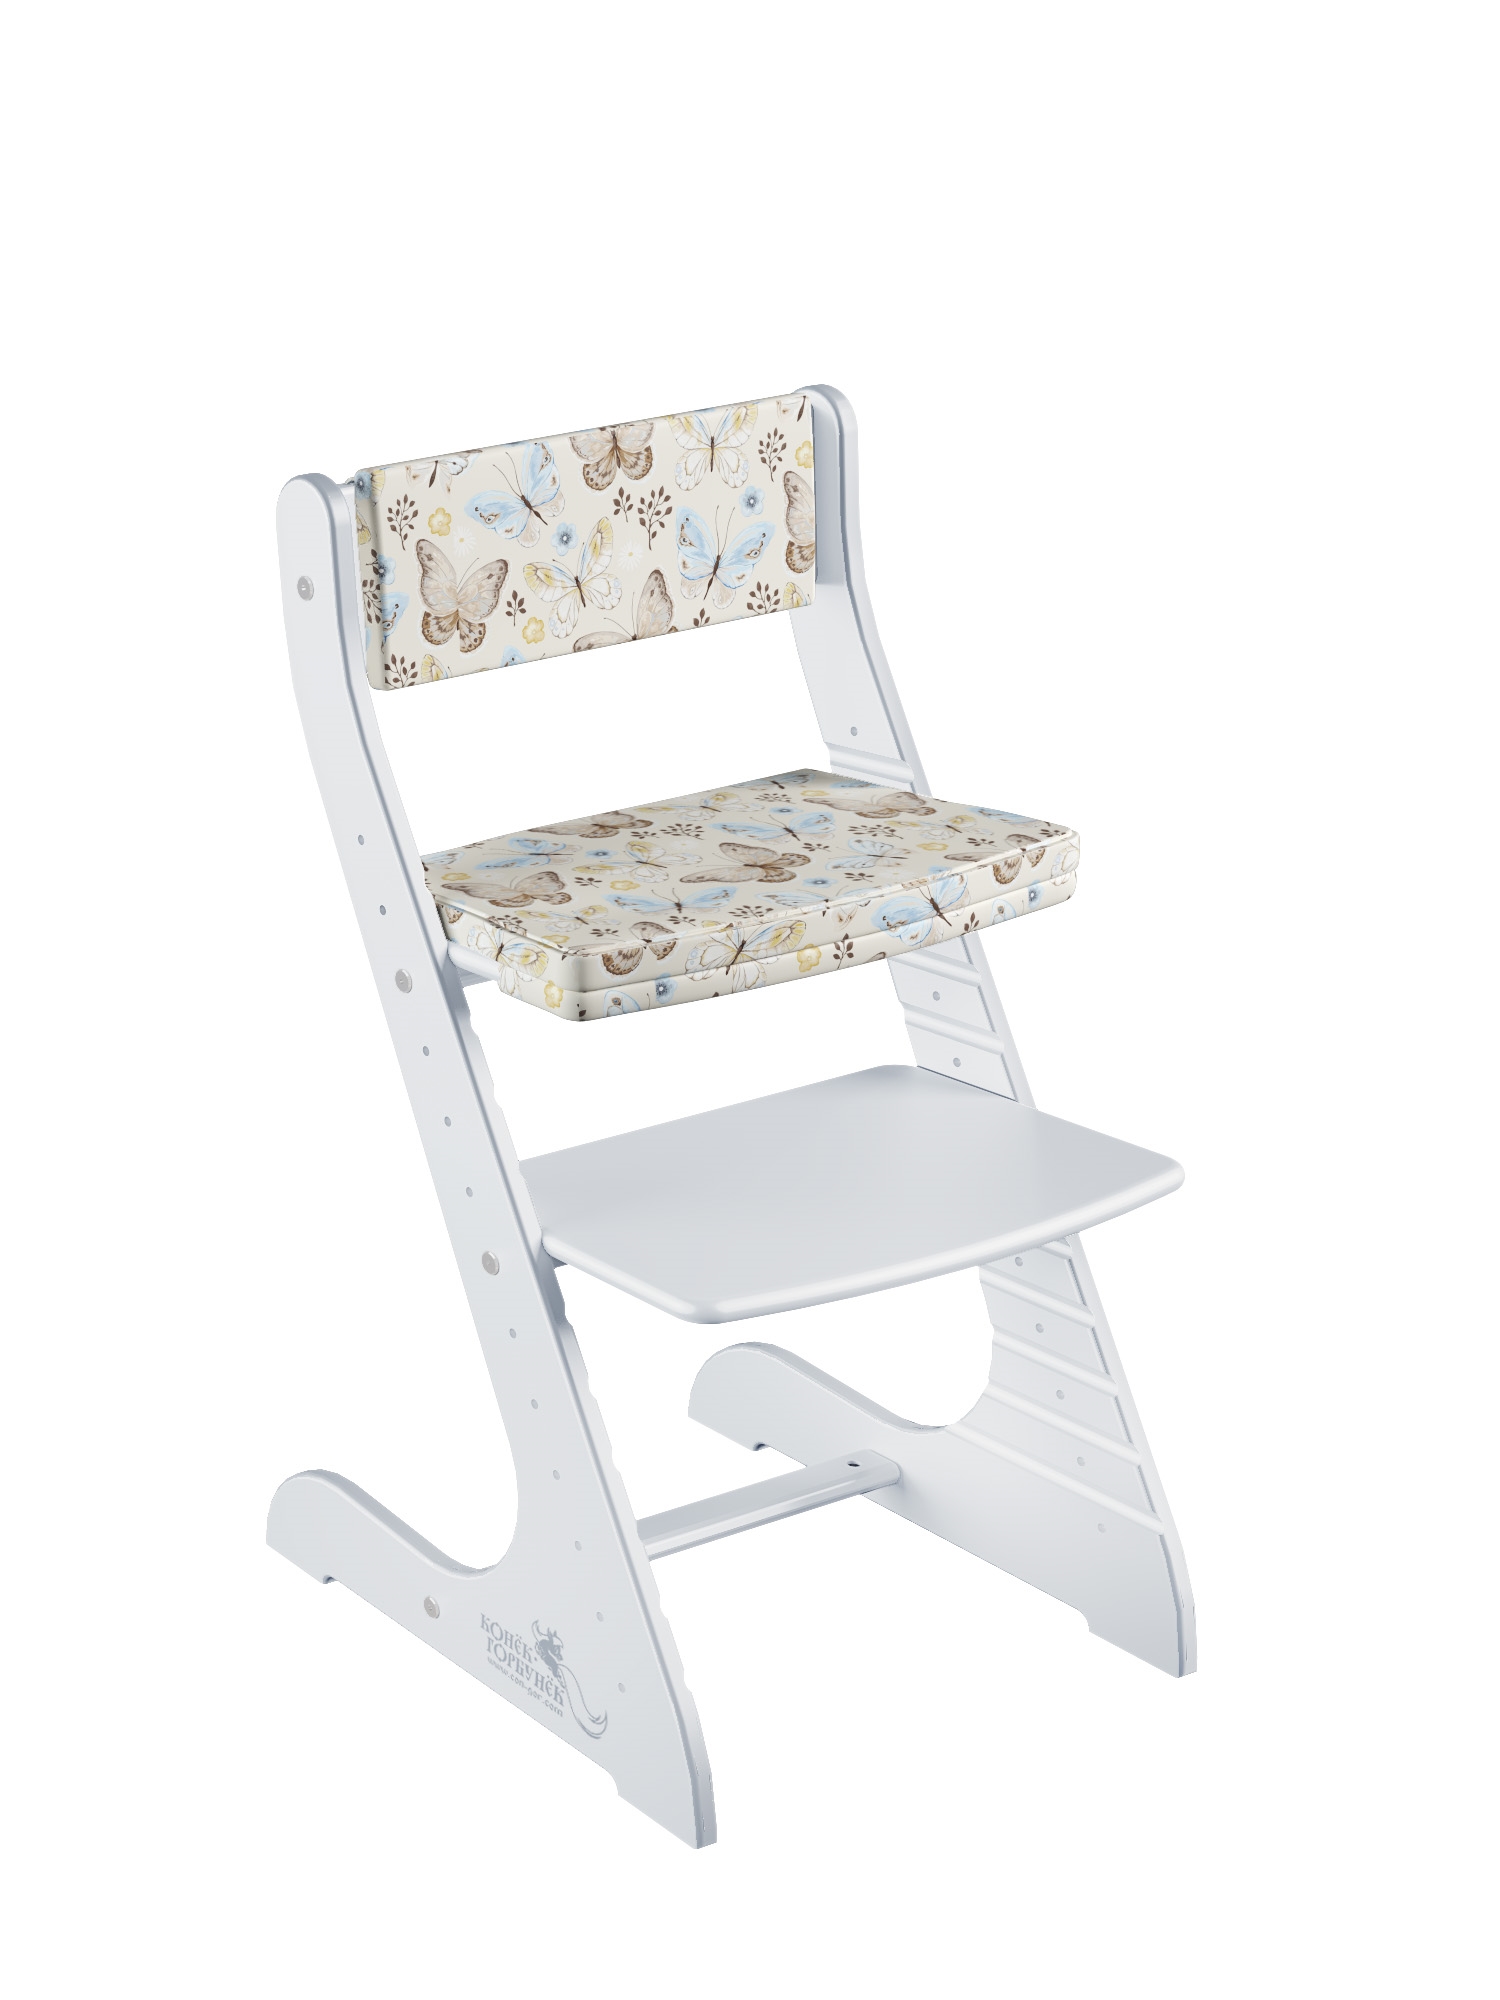 фото Комплект растущий стул и подушки конёк горбунёк стандарт, цвет белый 87214 конек горбунек